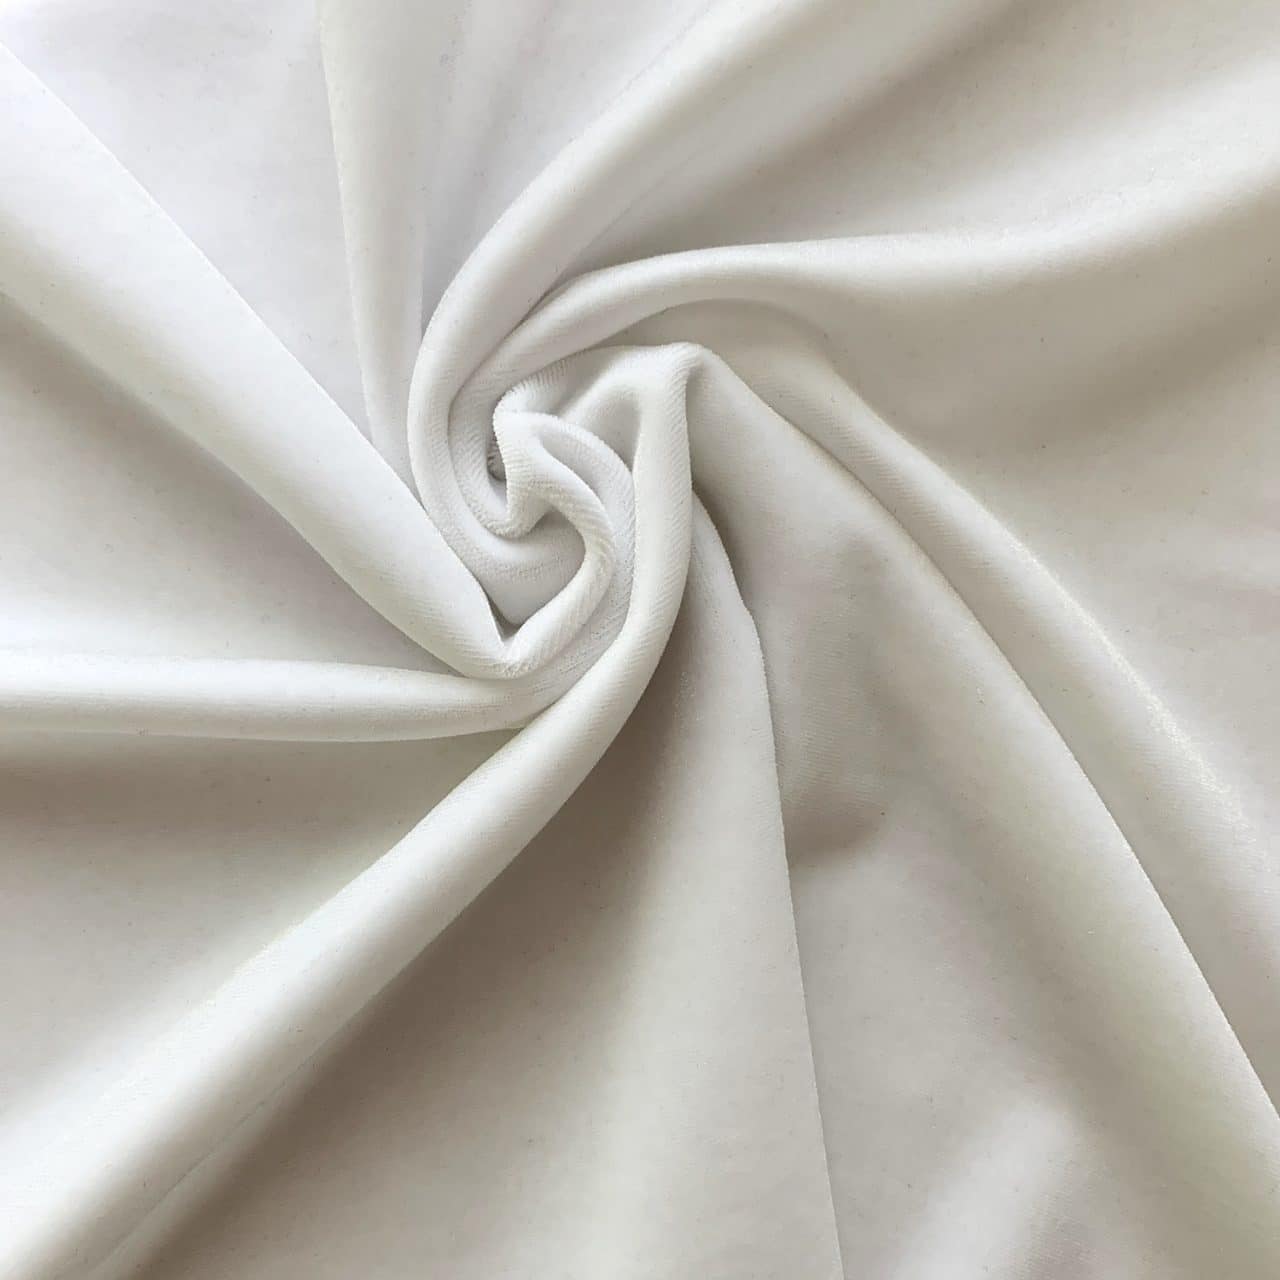 https://www.solidstonefabrics.com/wp-content/uploads/2018/06/DANCE-SOLID-VELVET-WHITE-WHITE-STRETCH-VELVET-FABRIC-BY-THE-YARD-SOLID-STONE-FABRICS-INC..jpg